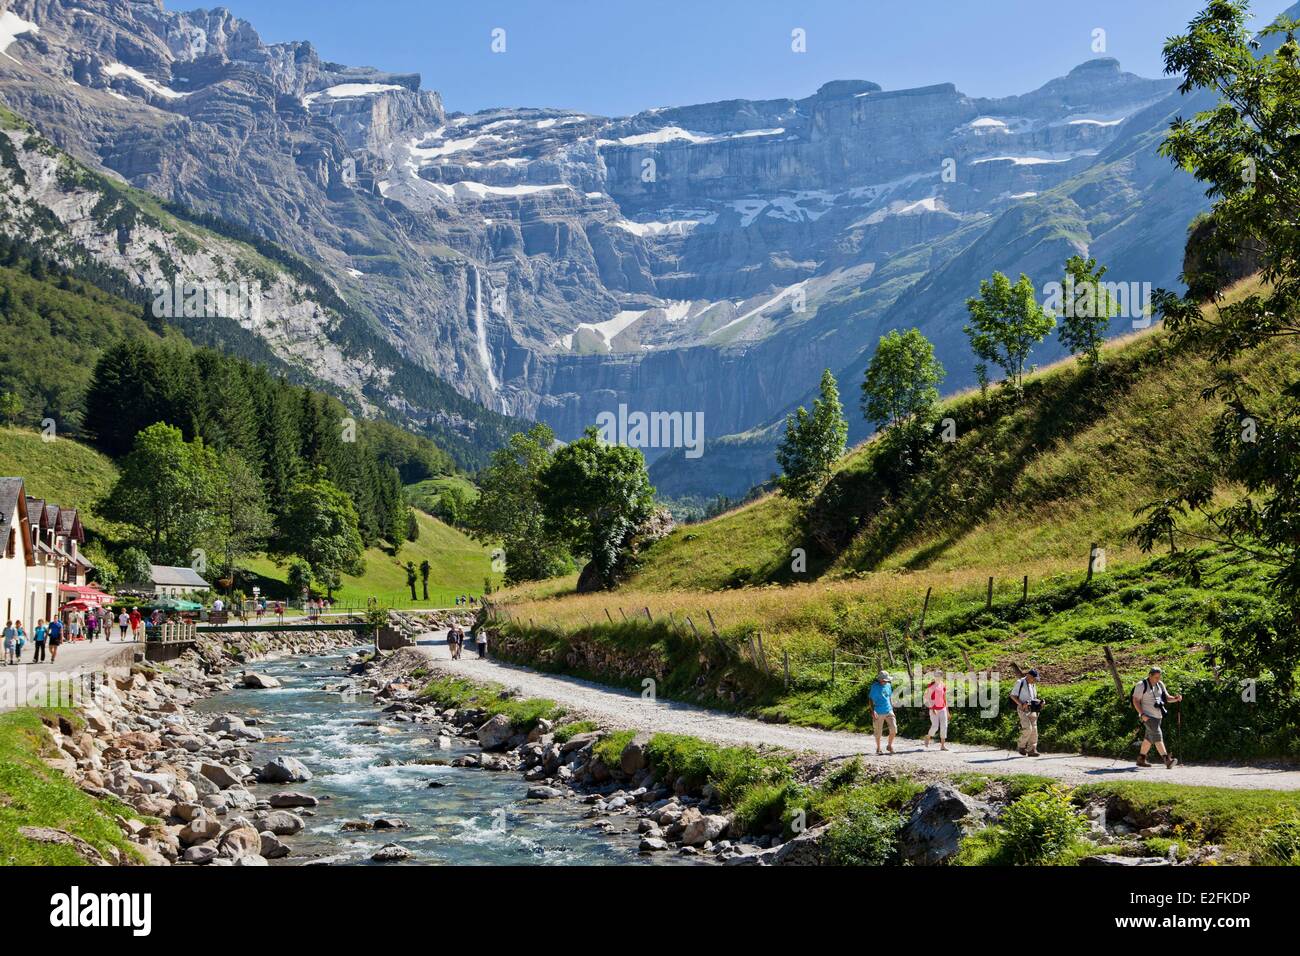 Francia Hautes Pirenei Parc National des Pyrenees (Parco Nazionale dei Pirenei) Cirque de Gavarnie elencati come patrimonio mondiale dall' UNESCO Foto Stock